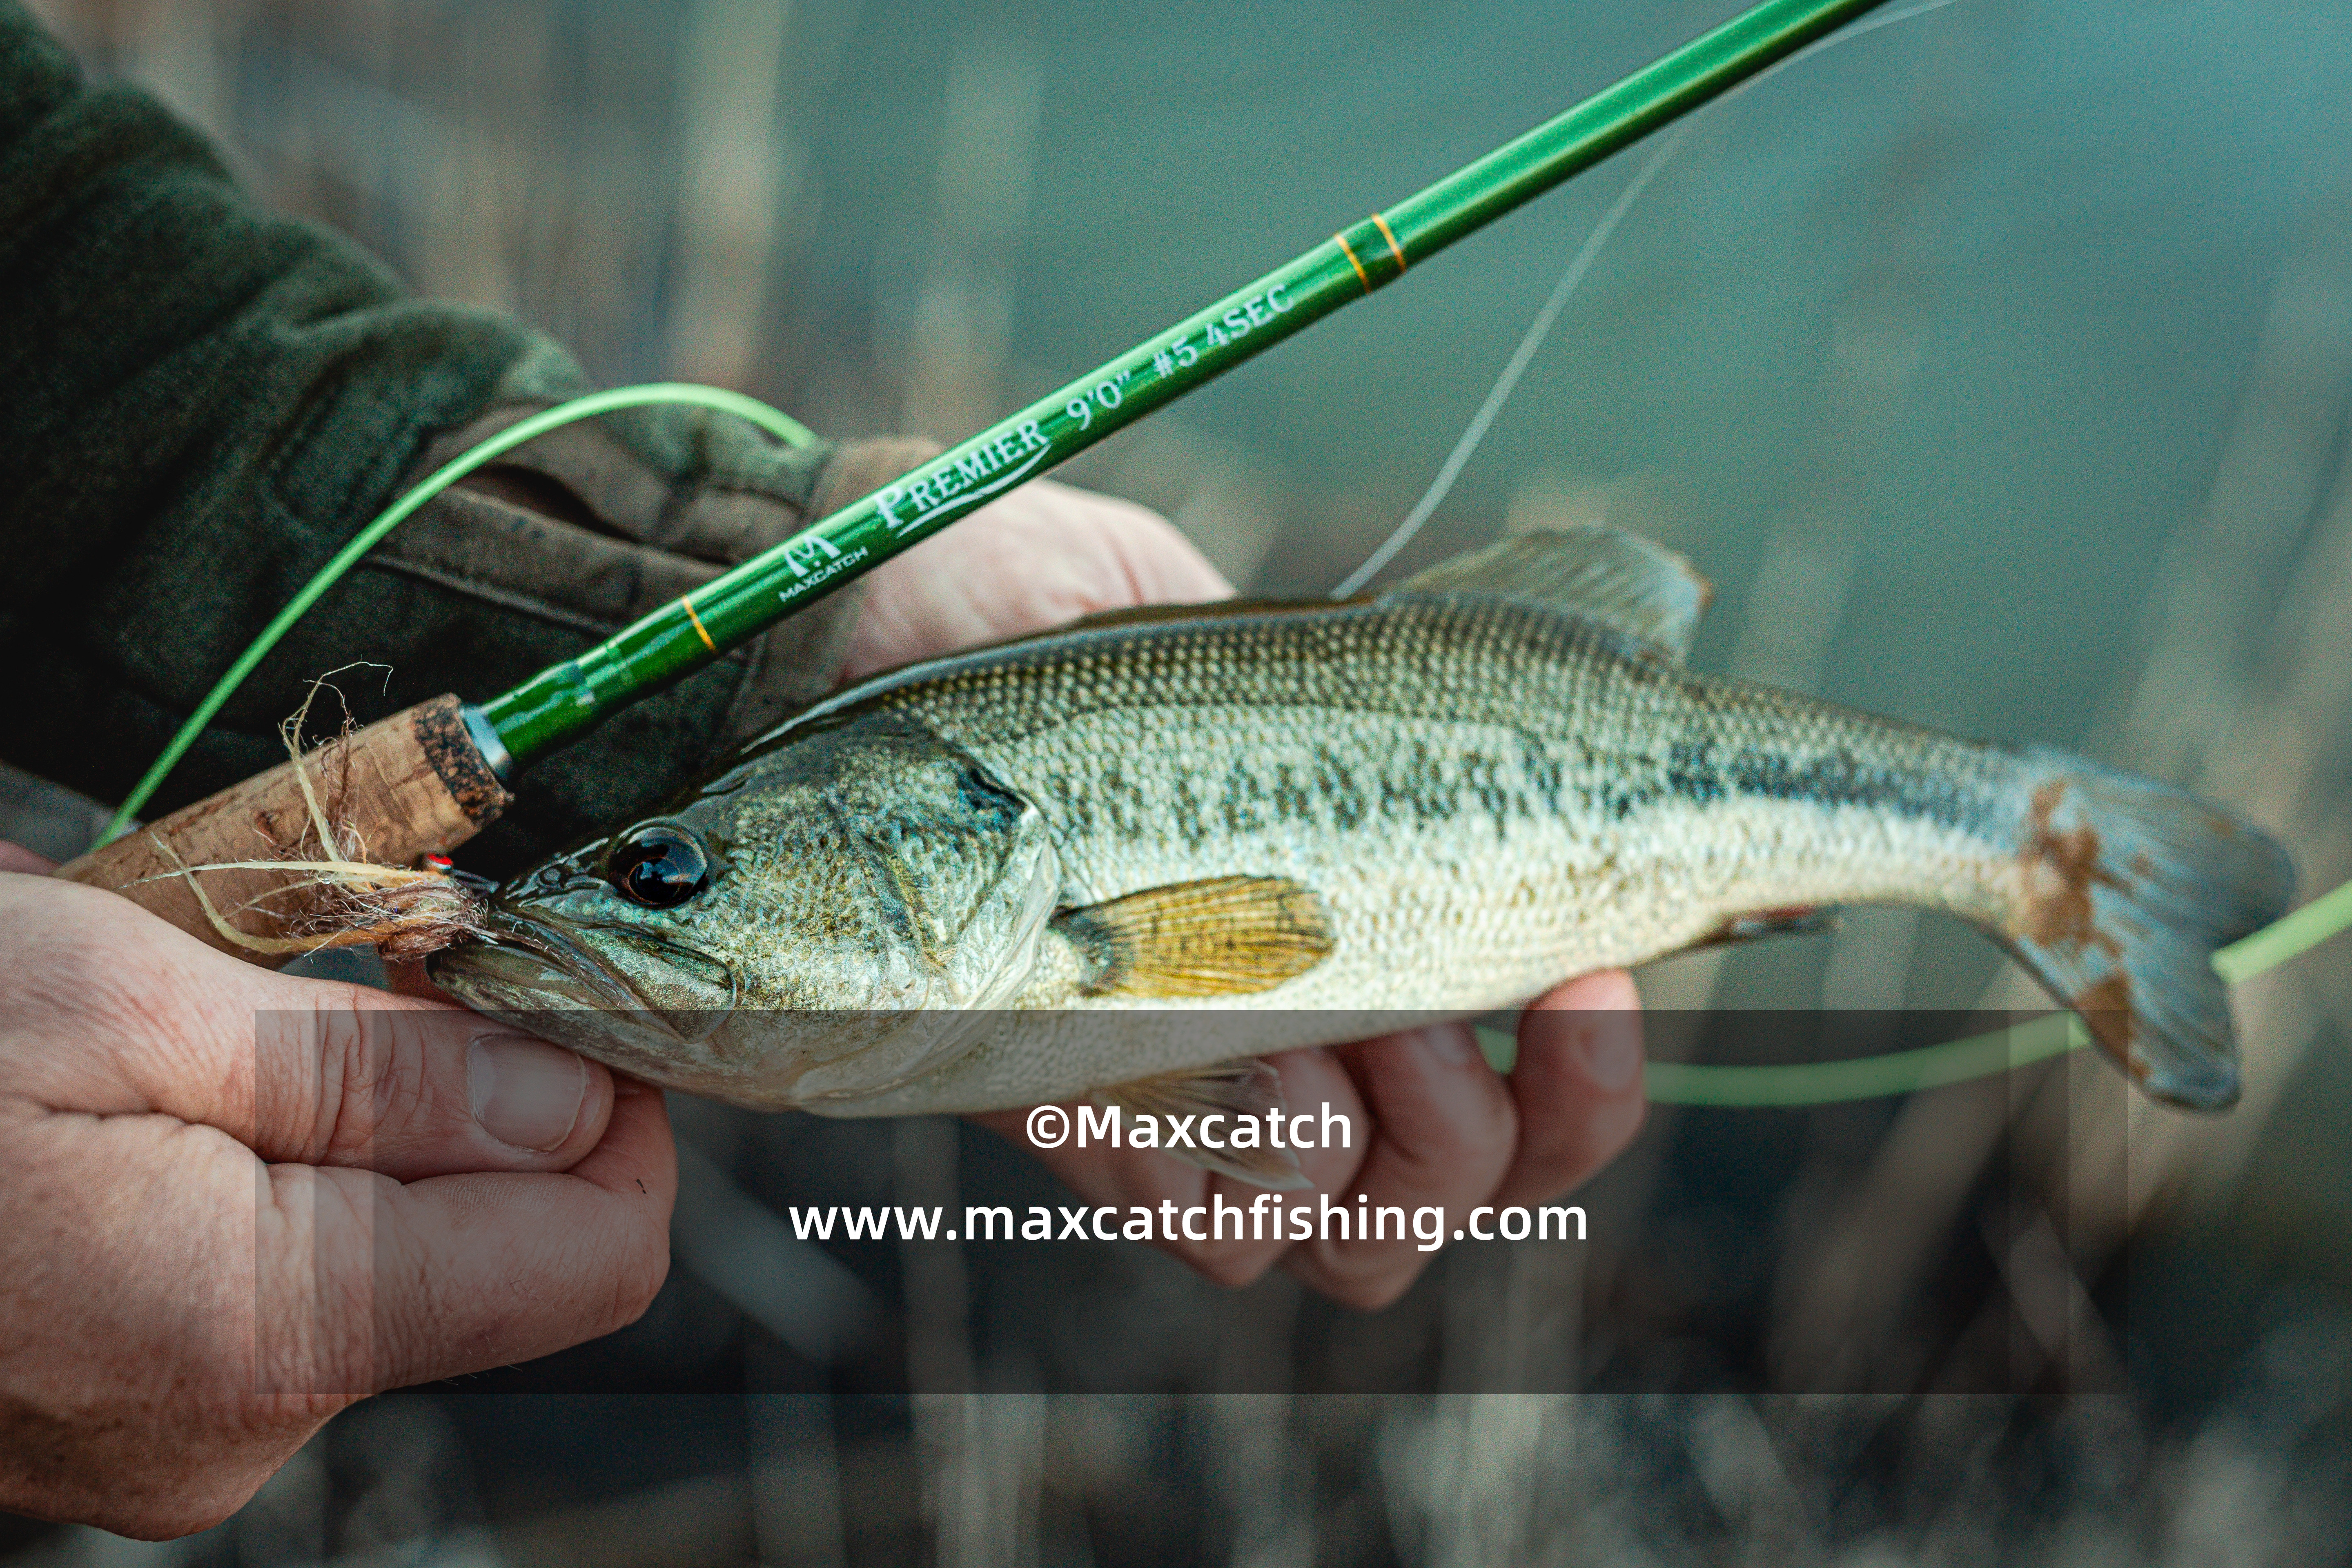 https://www.maxcatchfishing.com/img/cms/Premier/MAXCATCH%20NUEVAS%20FOTOS%20PATO%20%20(53).jpg